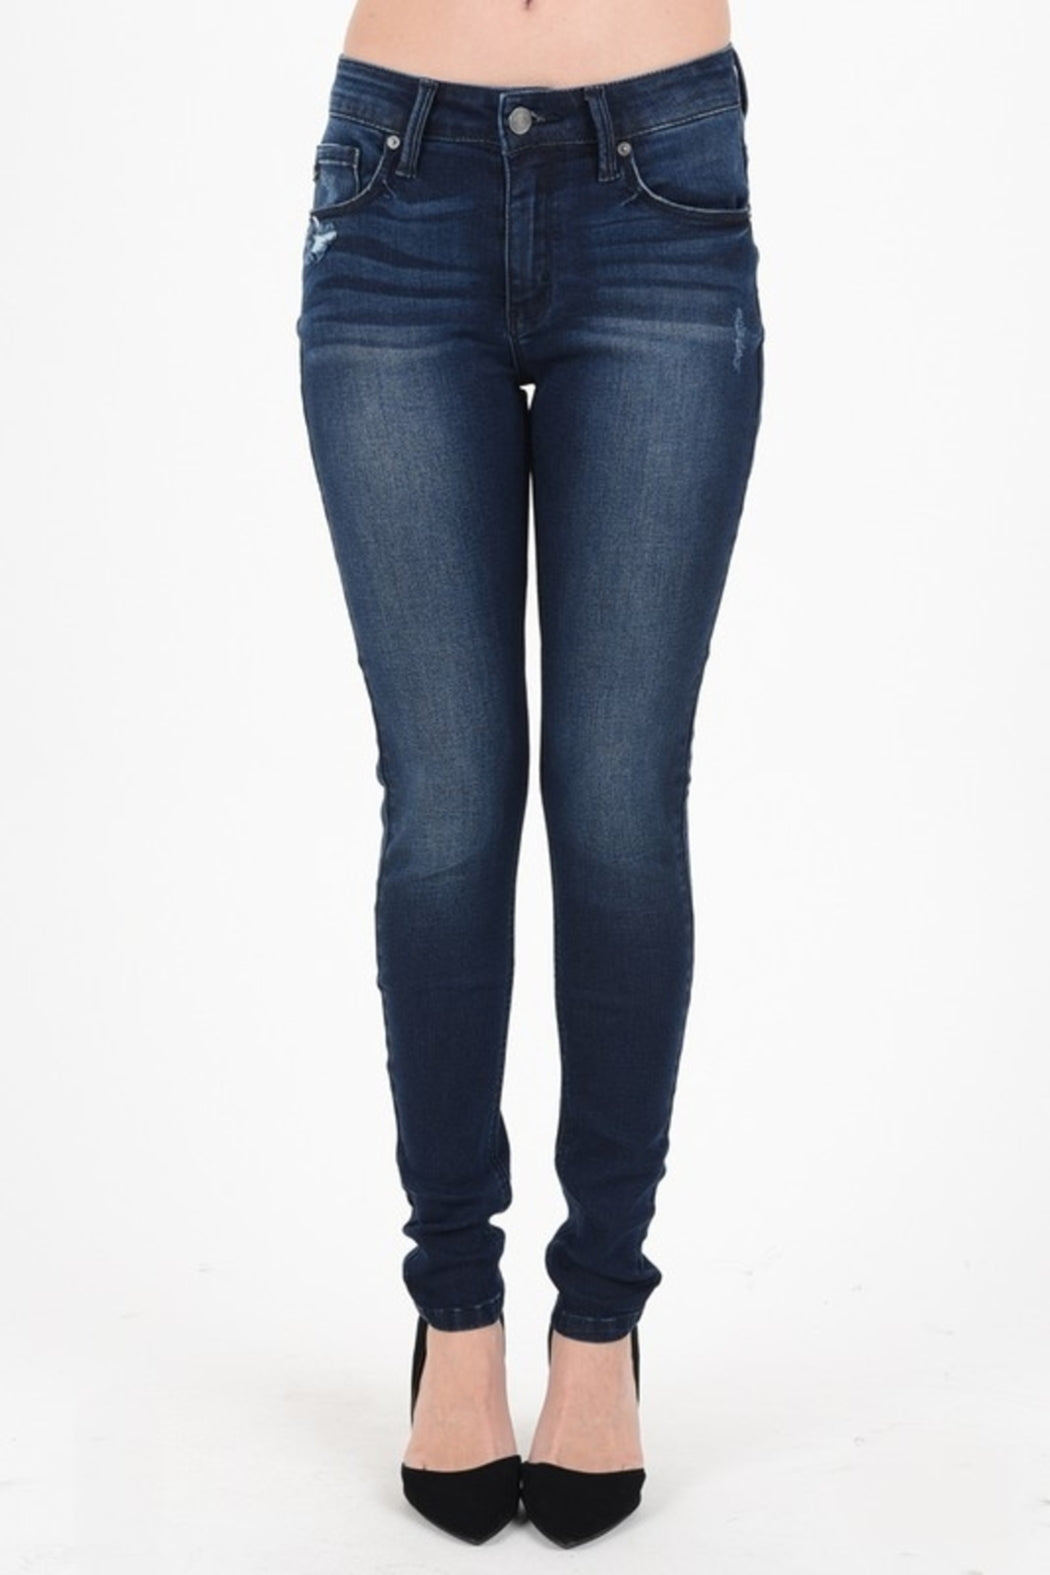 Mississippi KanCan Mid Rise Super Skinny Jeans-jeans-Emporium B, Women's Online Fashion Boutique in Colman, South Dakota